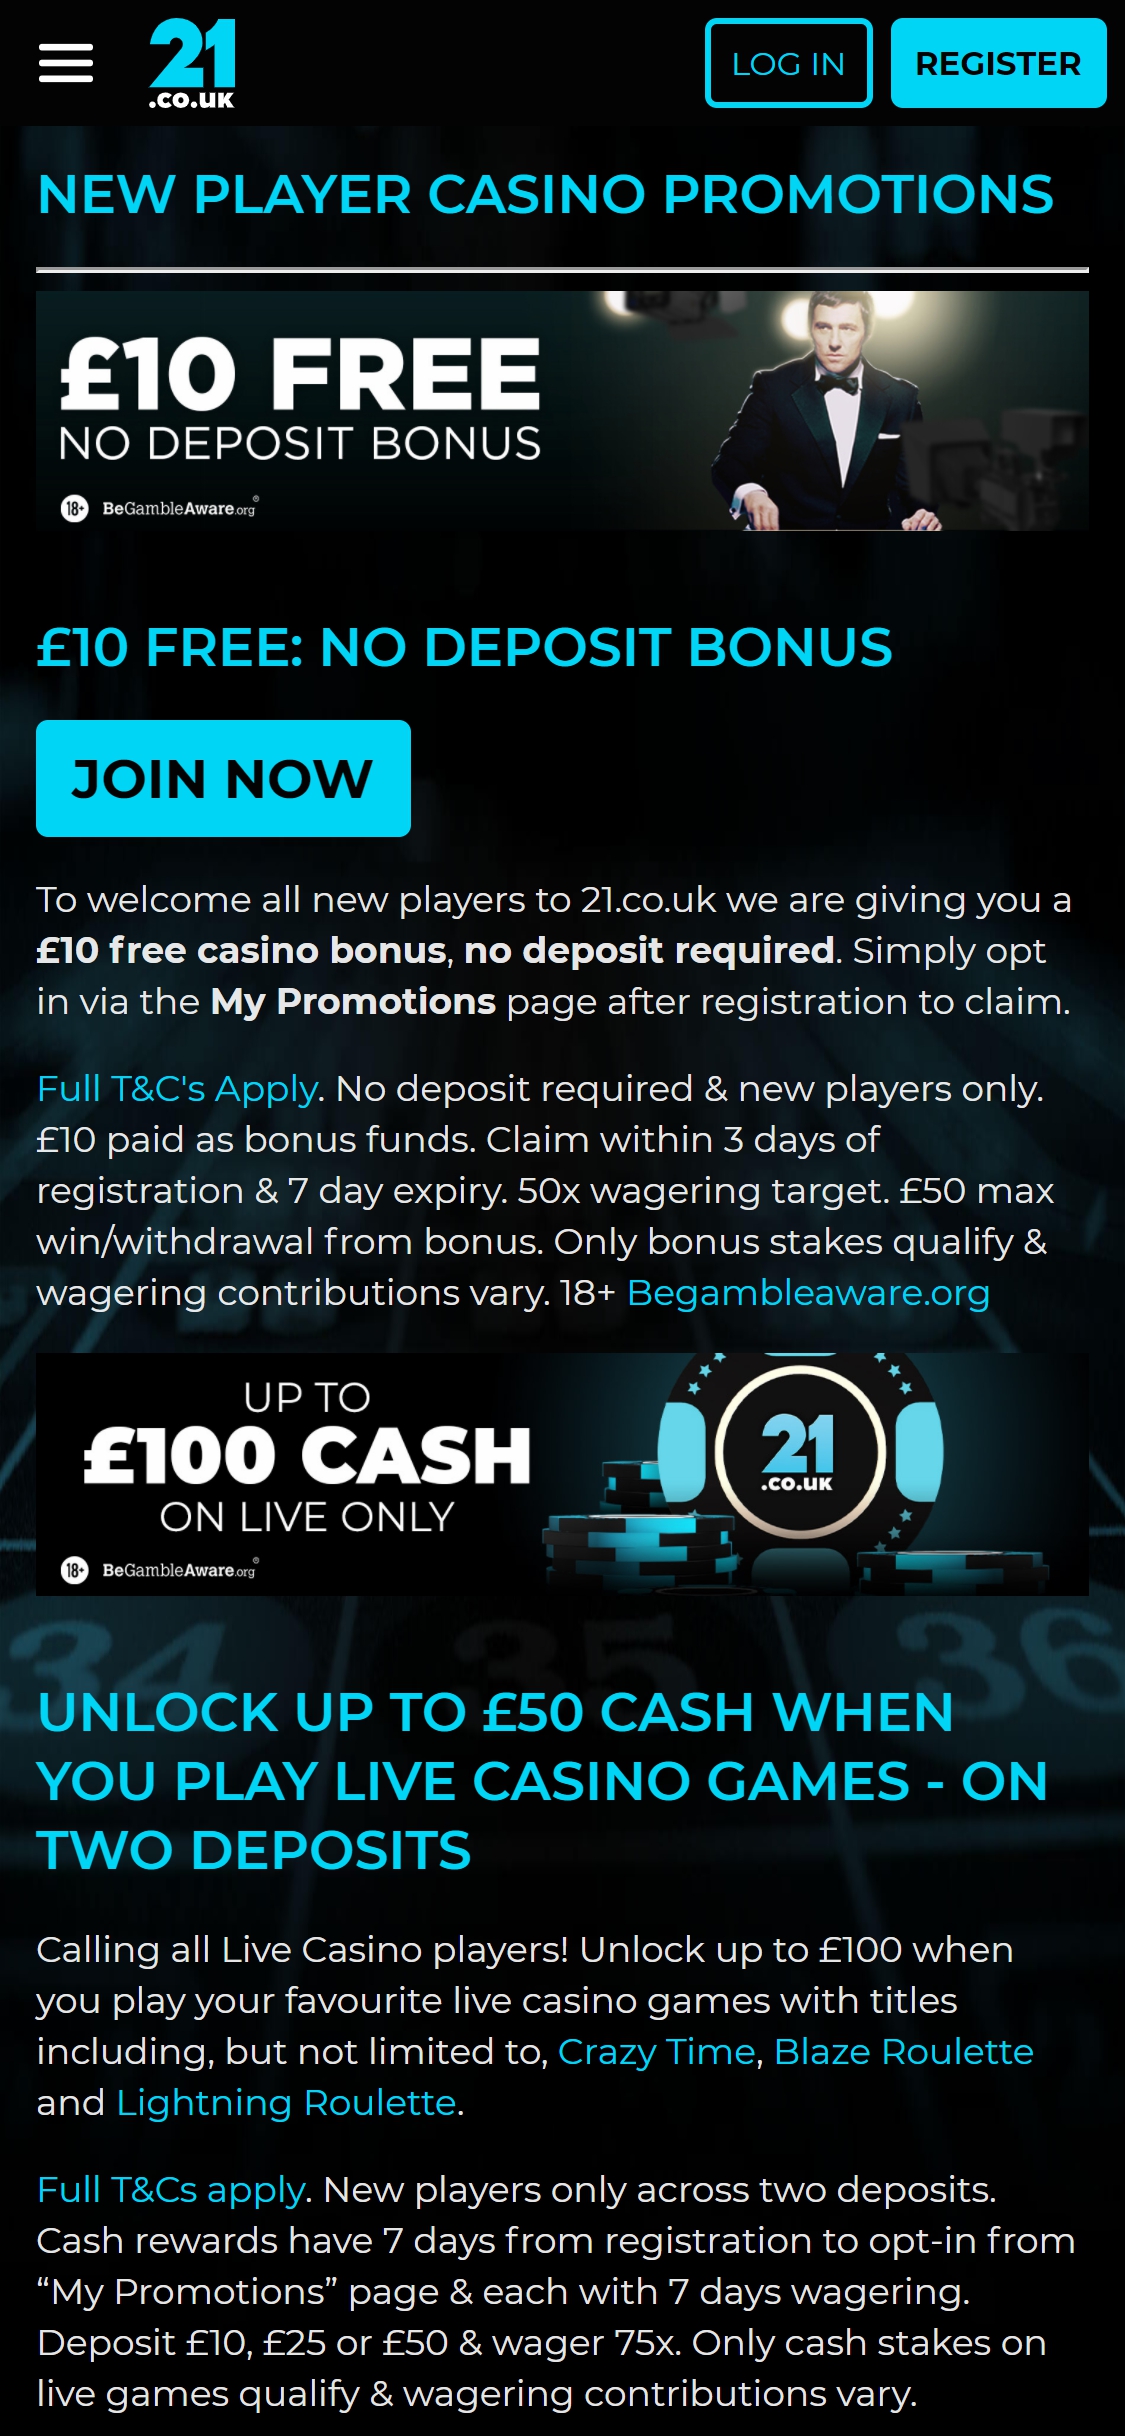 21.co.uk Casino Mobile No Deposit Bonus Review